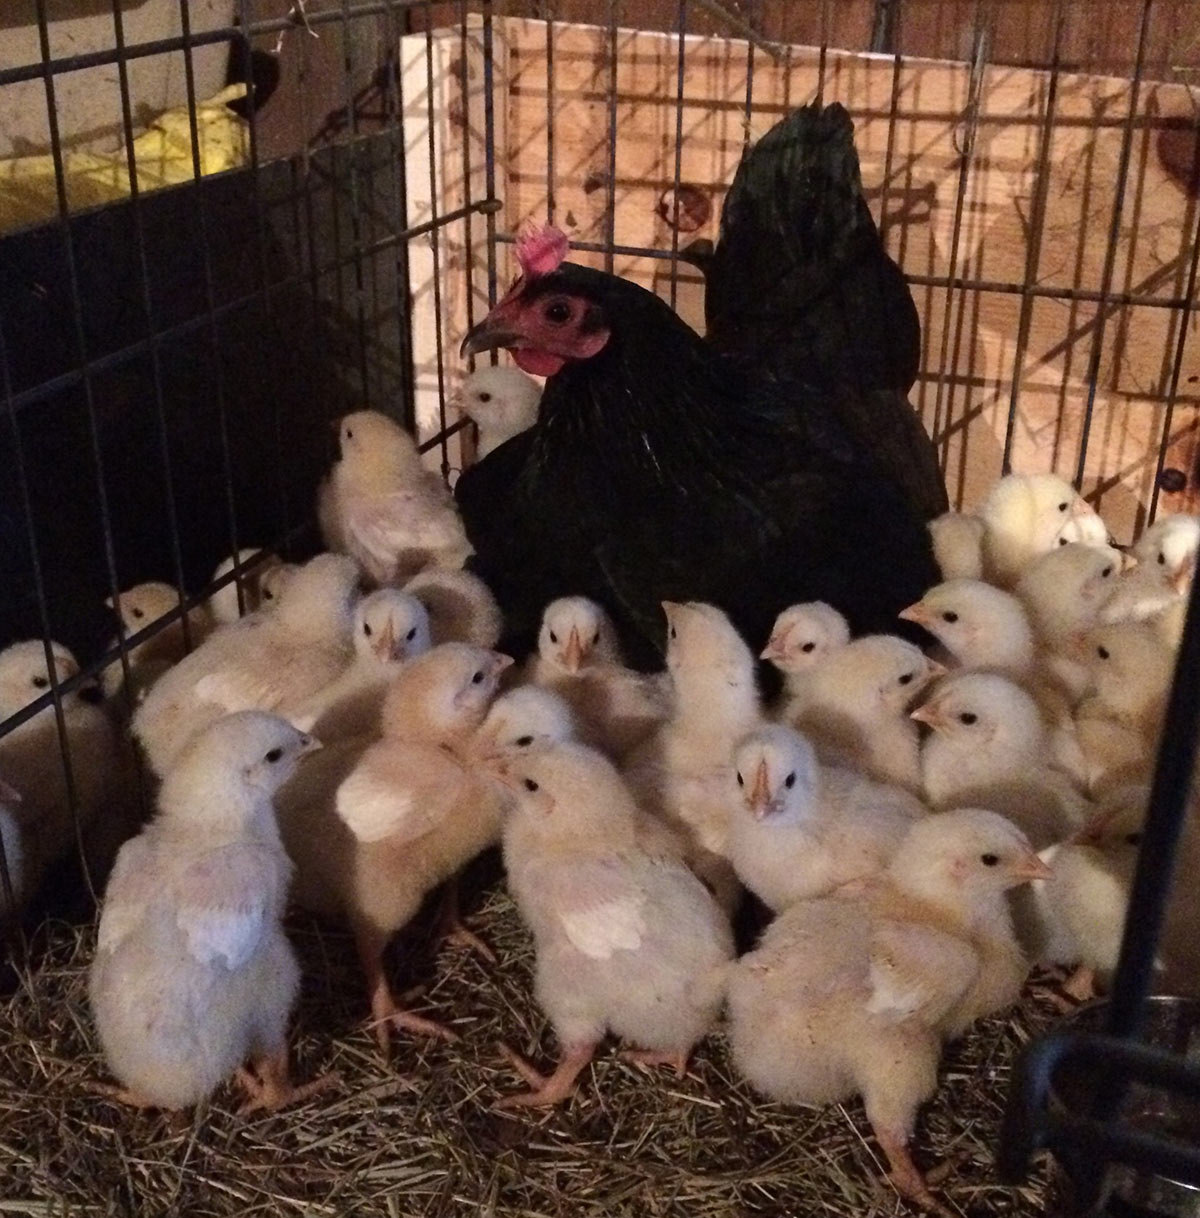 Broody hen with hatcher cornish cross chicks